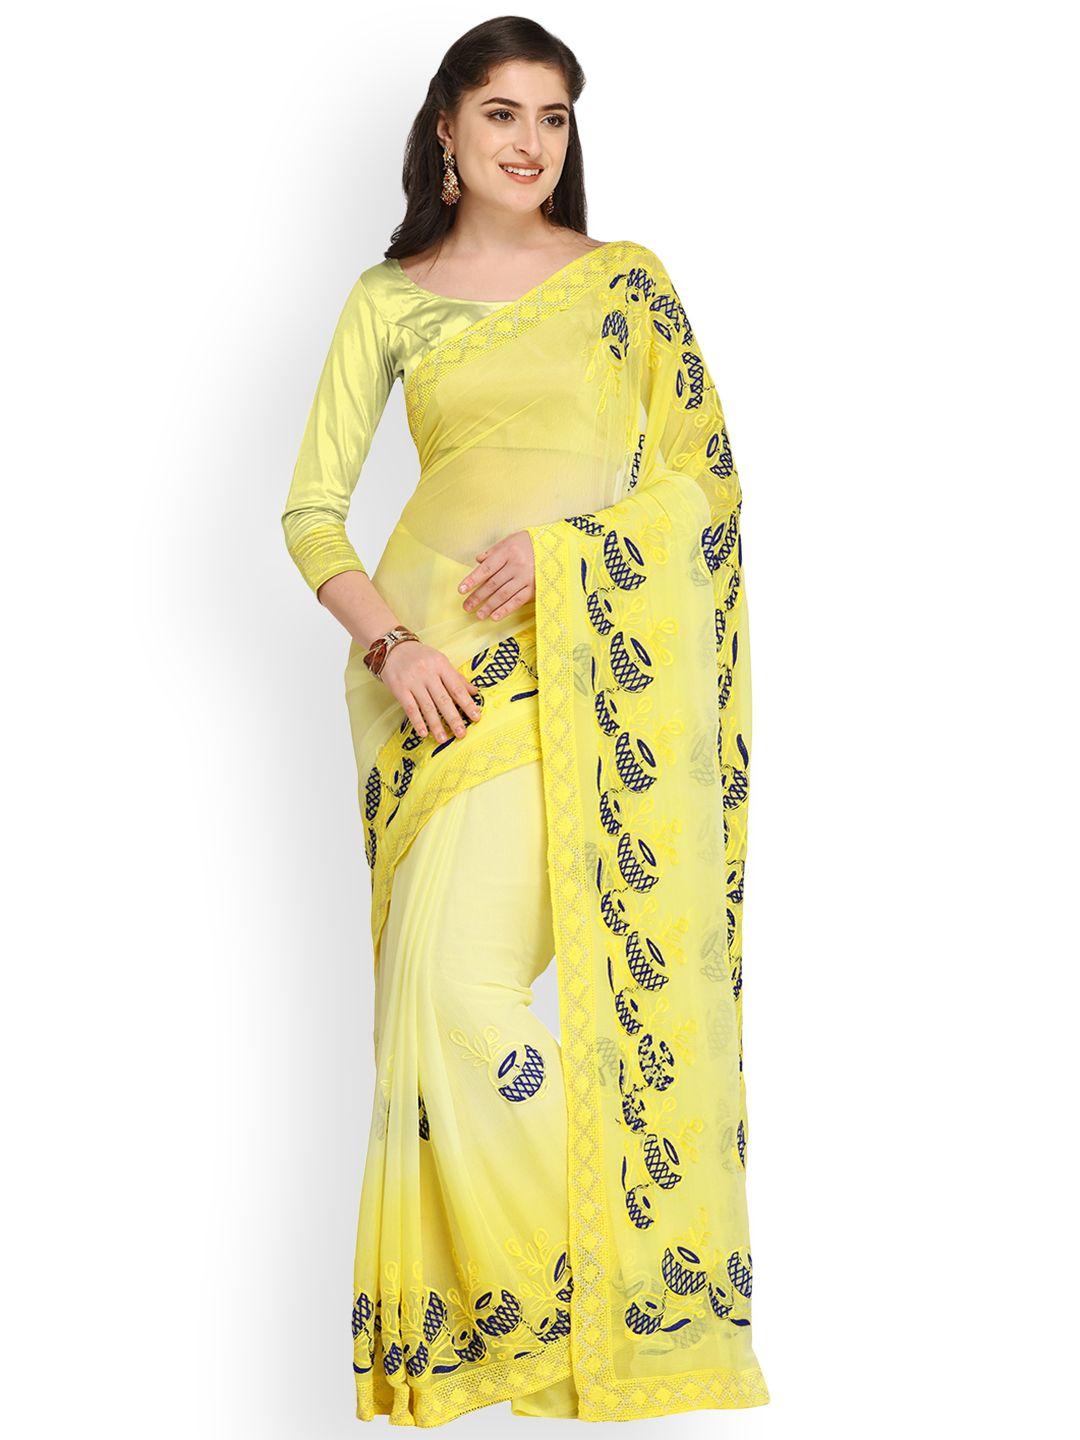 blissta yellow embroidered poly chiffon saree